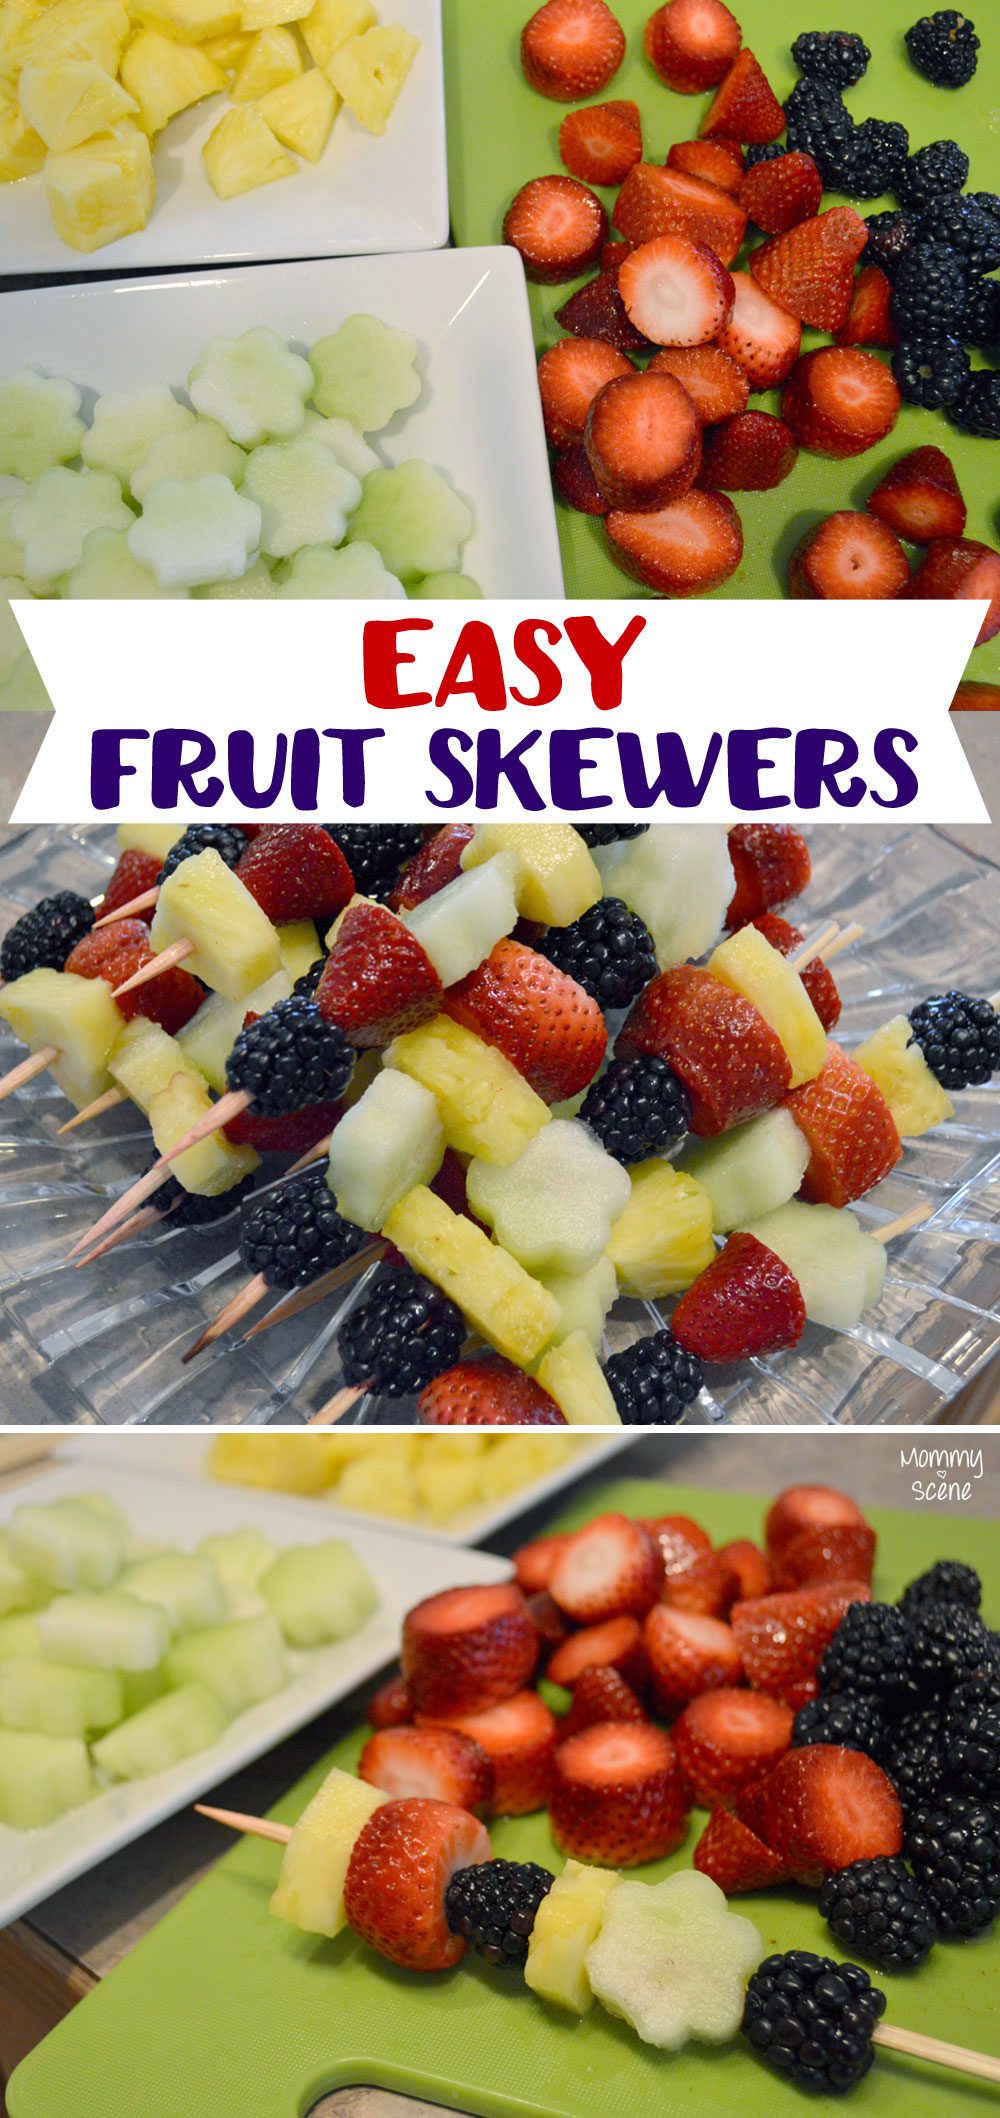 Easy Fruit Skewers for kids' parties - Mommy Scene